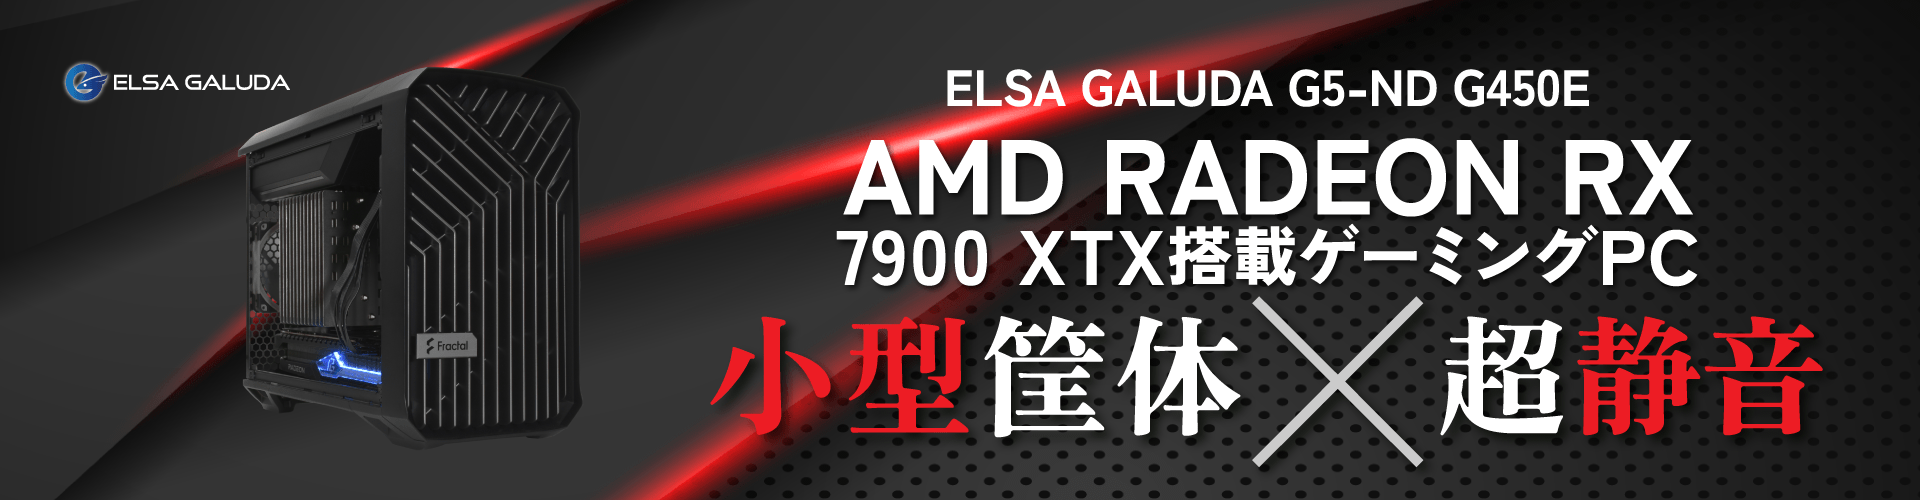 ELSA GALUDA G5-ND G450E Radeon RX7900XTX